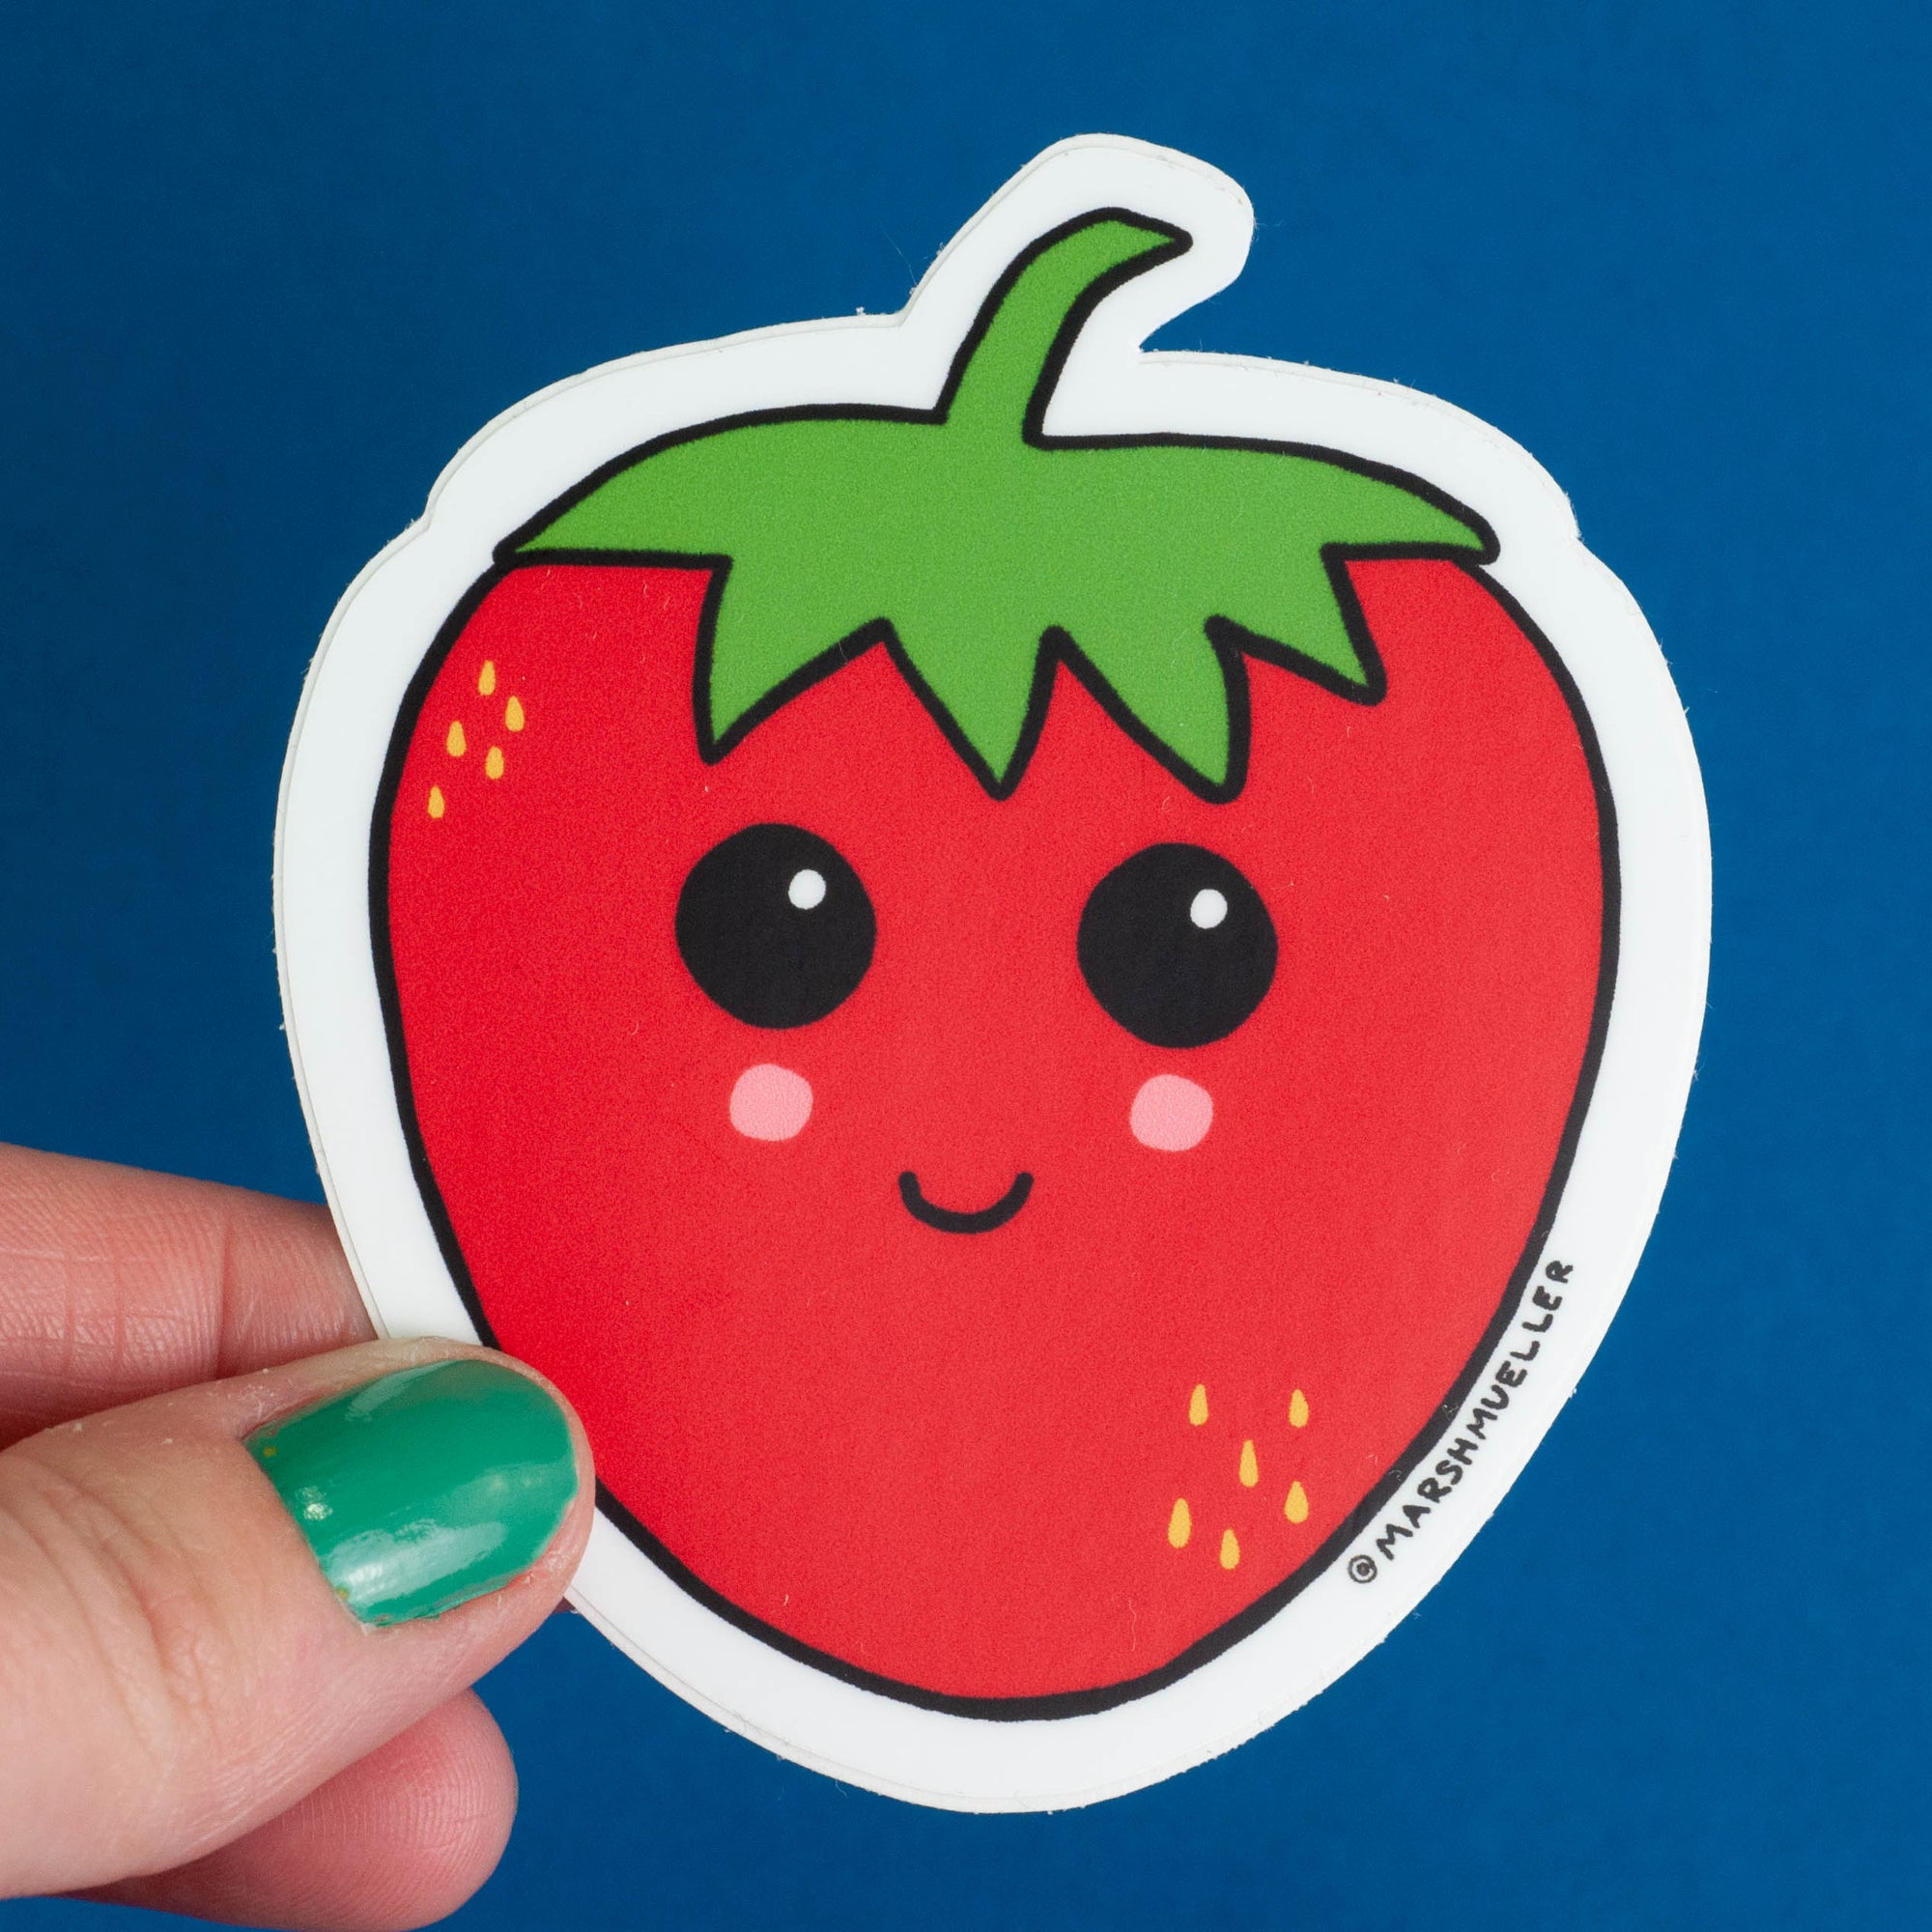 STICKERS x 10 STRAWBERRY Stickers CUTE! Sas Strawberries Sticker ST1